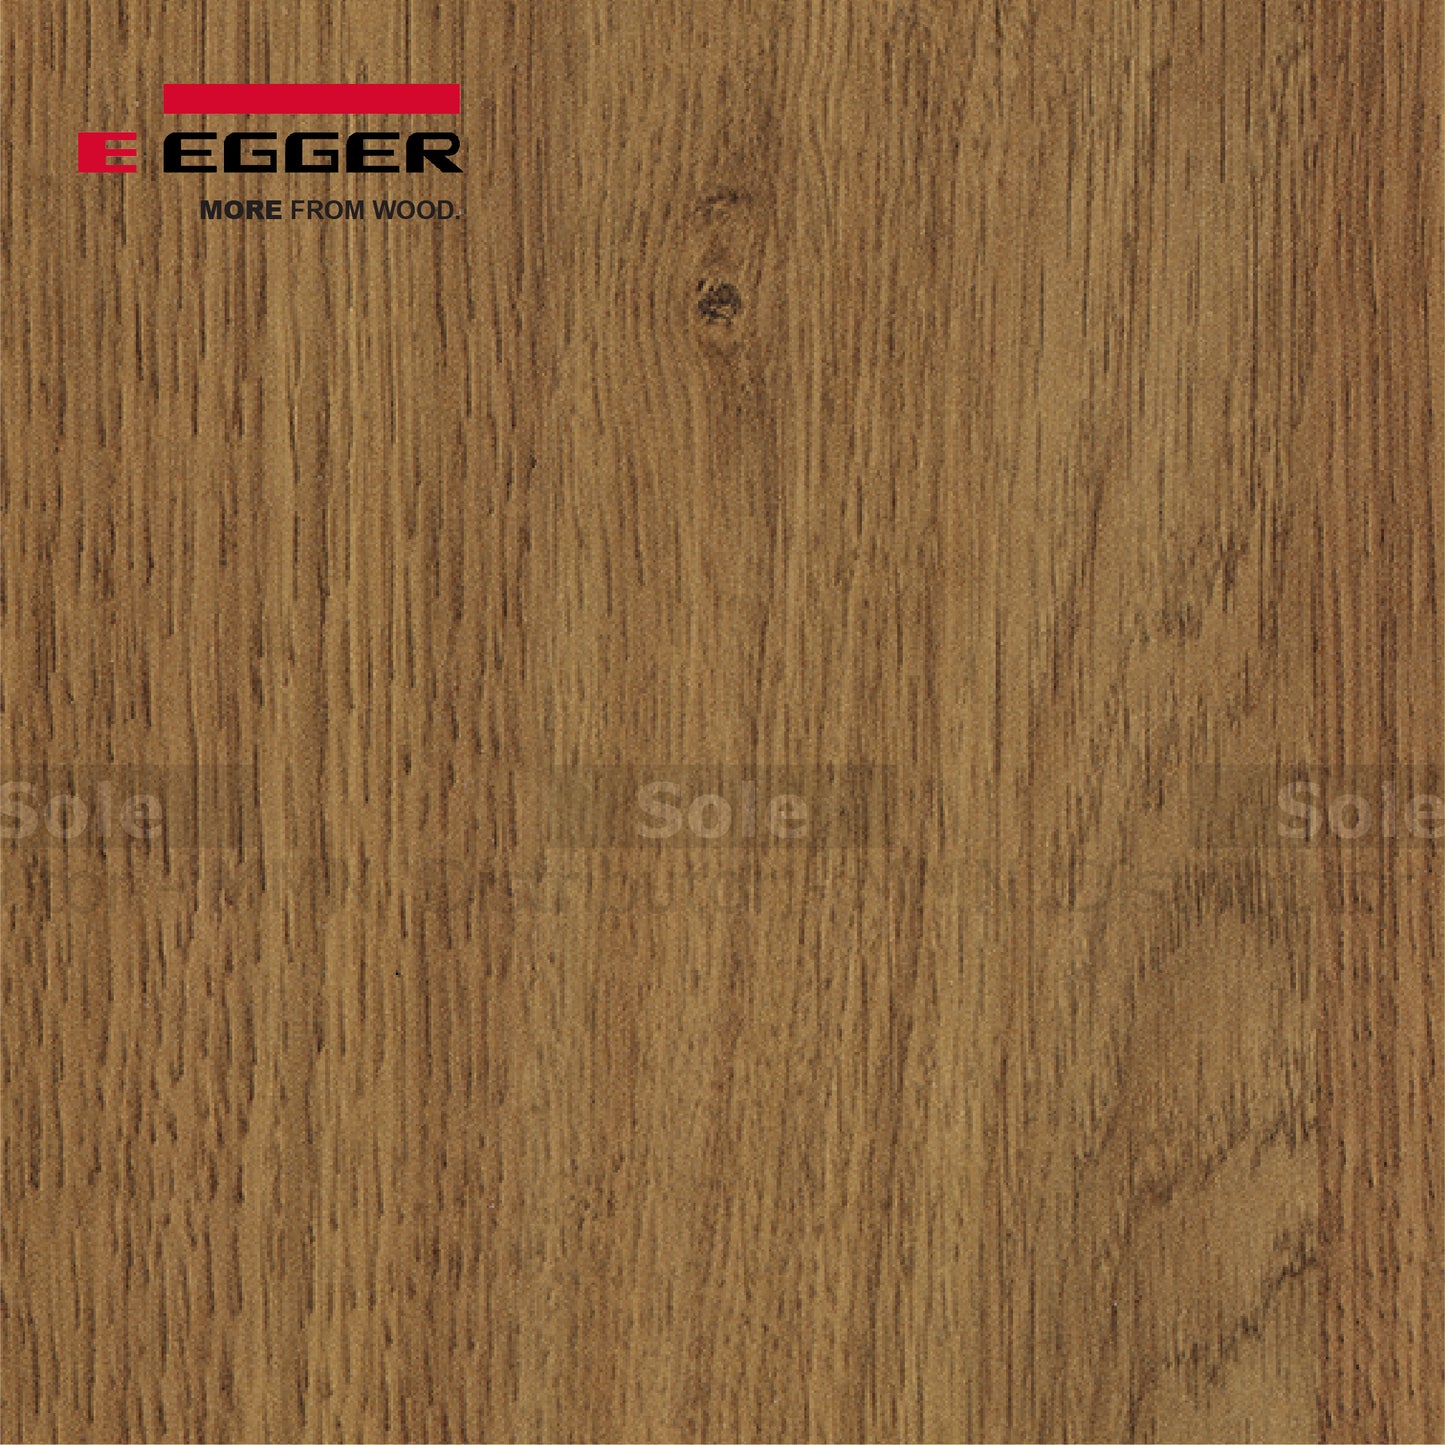 Egger Board Cognac Kendal Oak, Thickness 18mm, Size 2800x2070mm - EGBH3398ST12